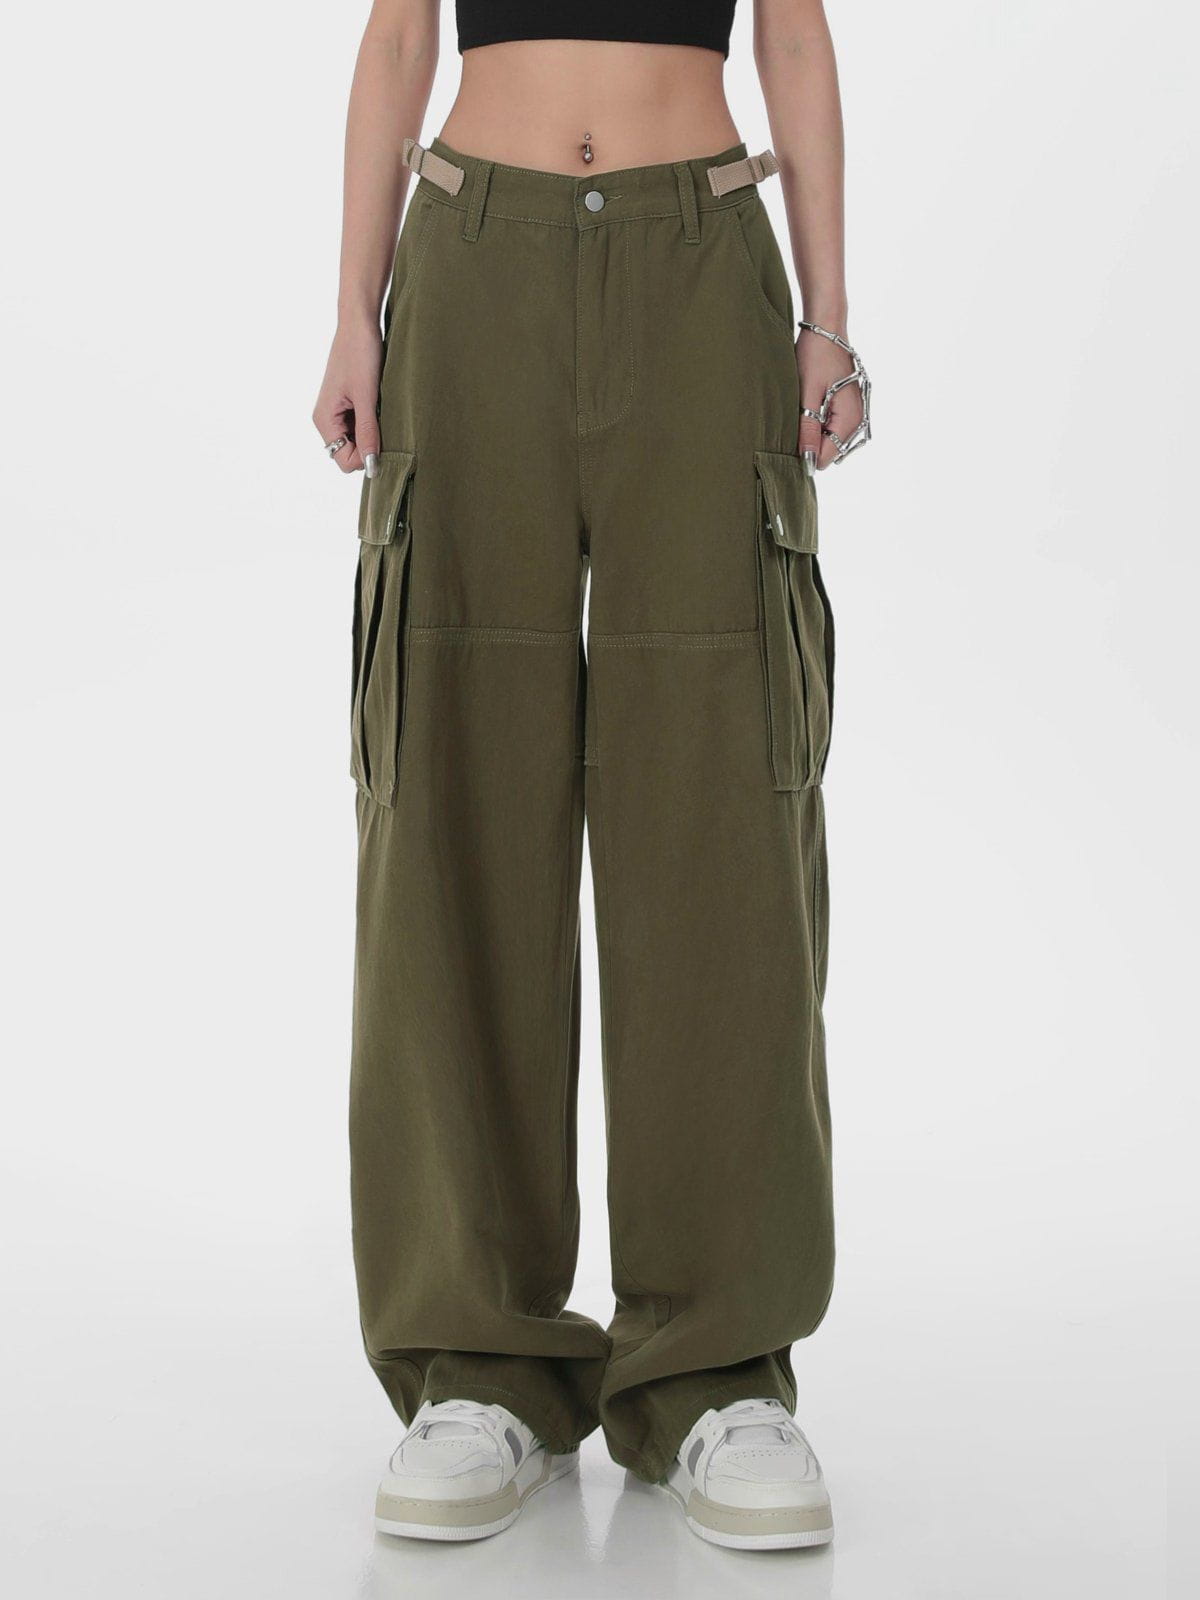 Majesda® - Hip Hop Straight Cargo Pants outfit ideas streetwear fashion